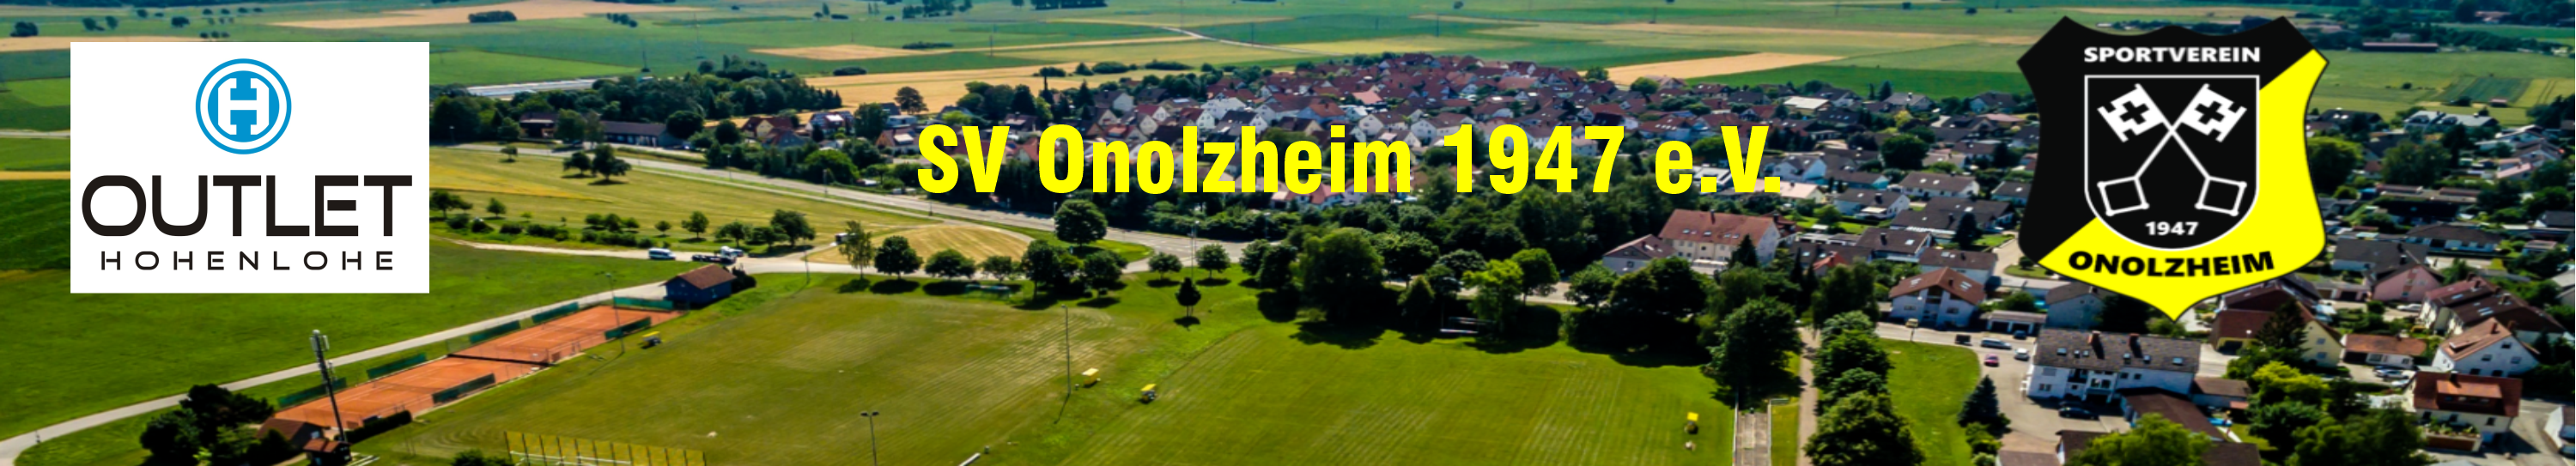 SV Onolzheim Title Image